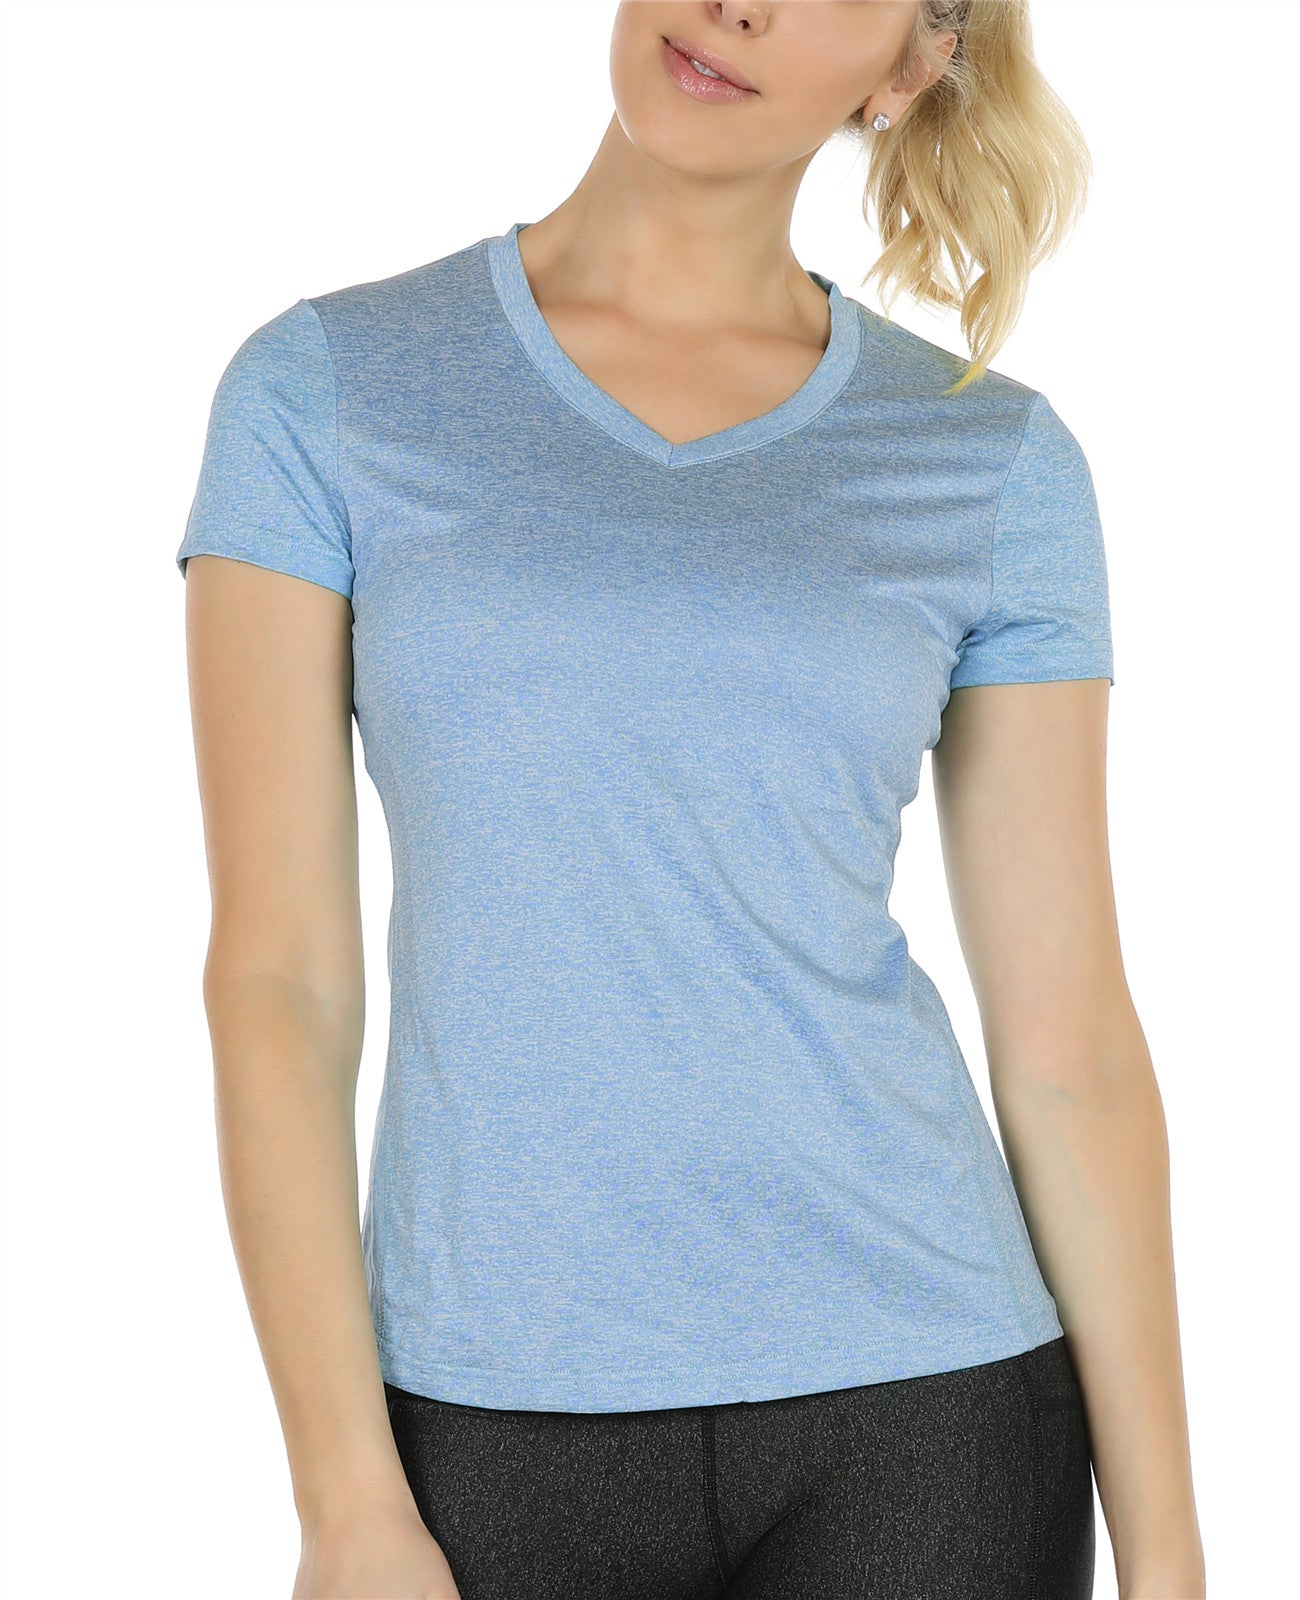 SPECIALMAGIC Women's Workout Tops Athletic Shirts Yoga Tops Sports Short  Sleeve Running Gym T-Shirts Navy Blue Medium